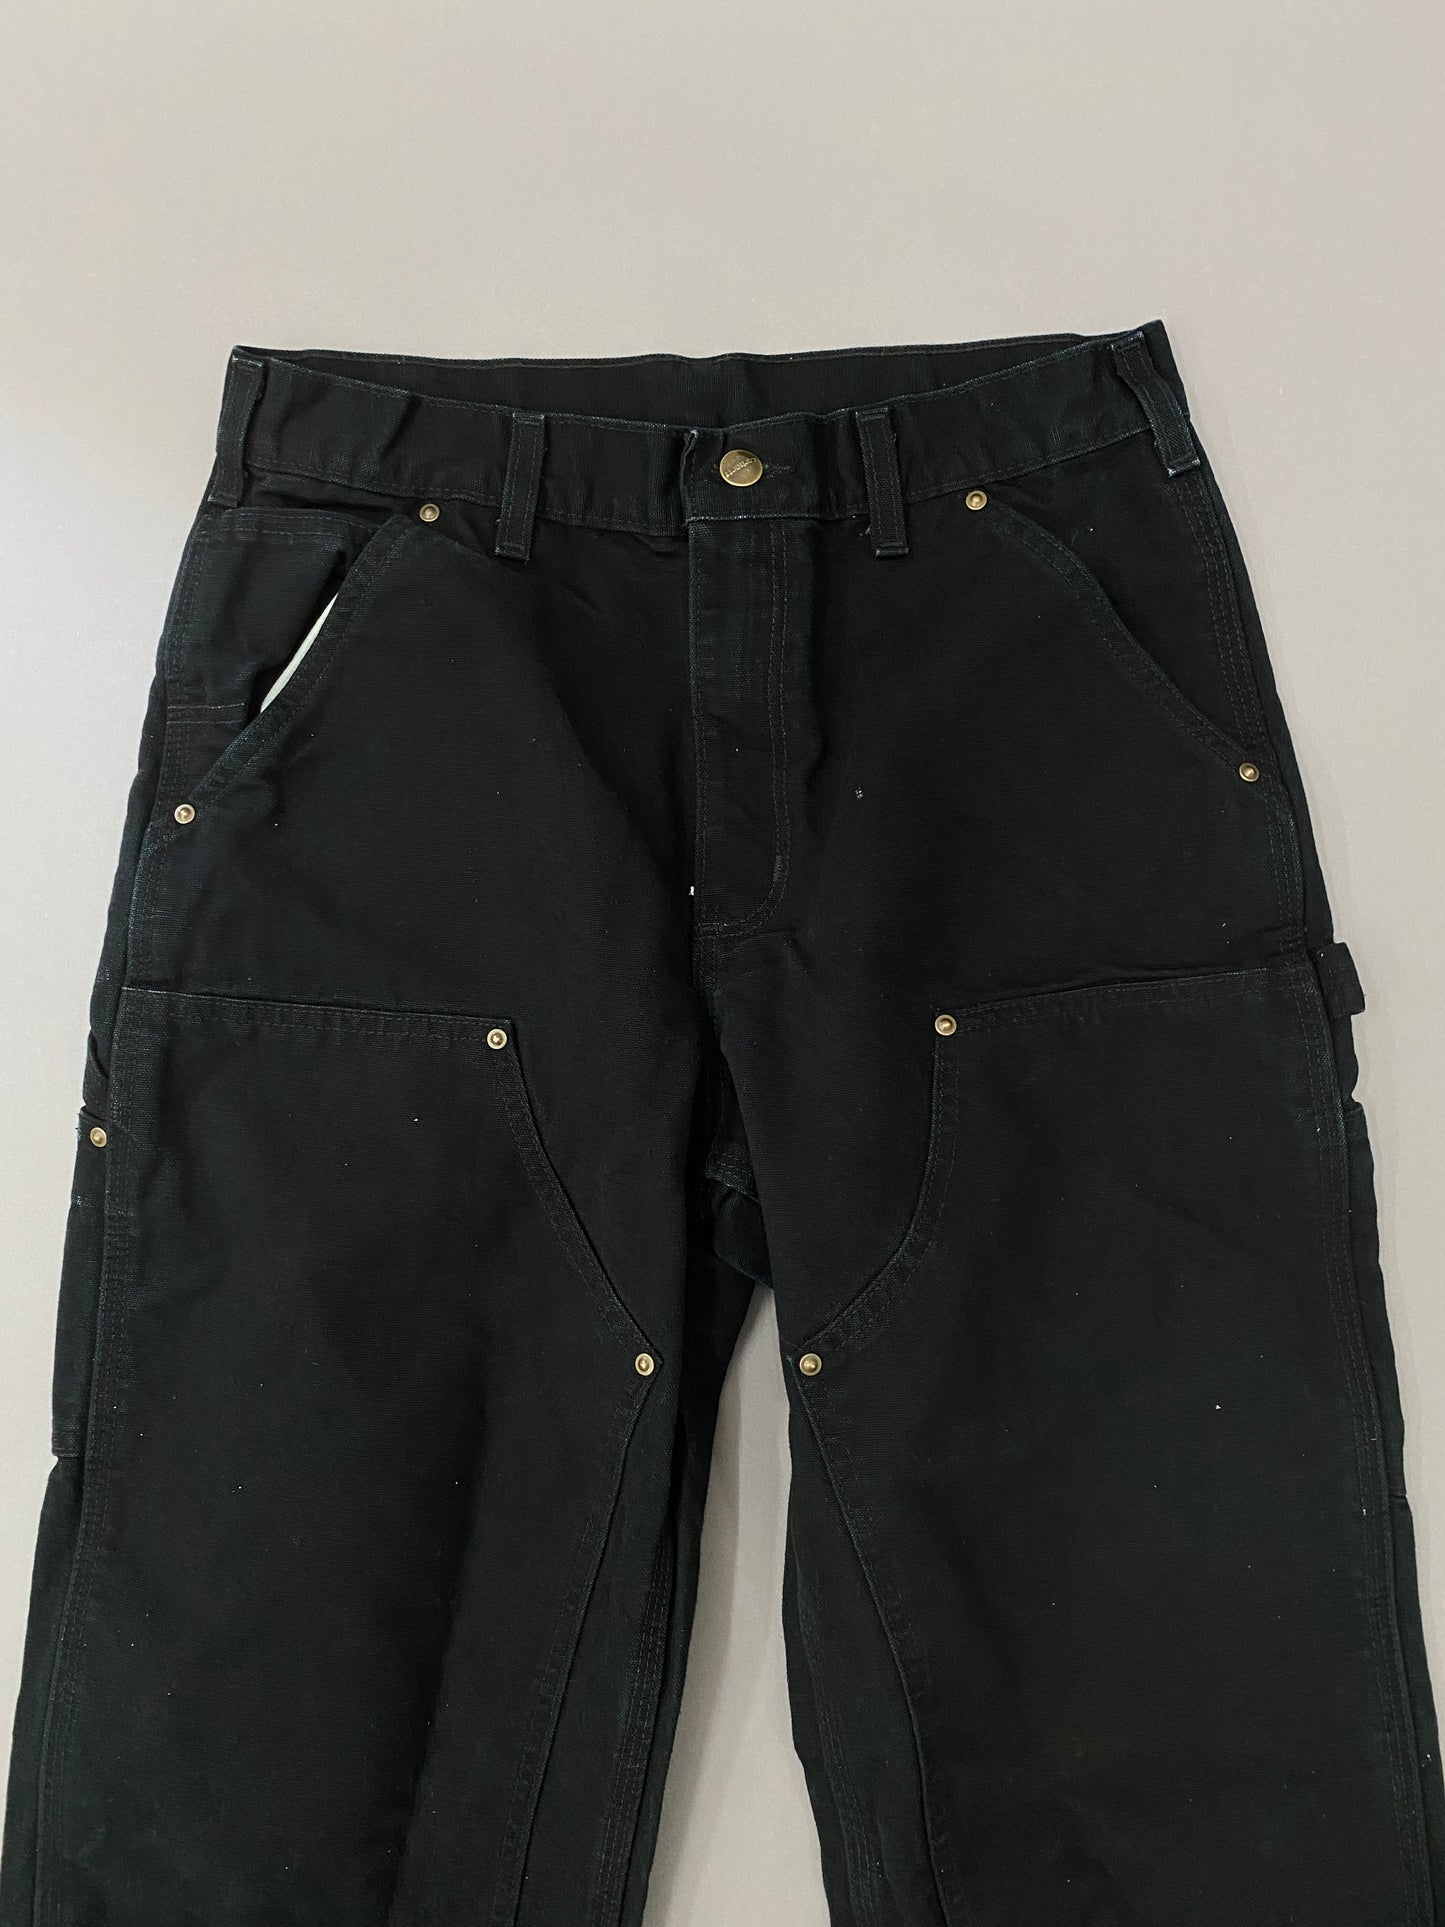 Double Knee Carhartt Jeans Vintage - 31 x 32